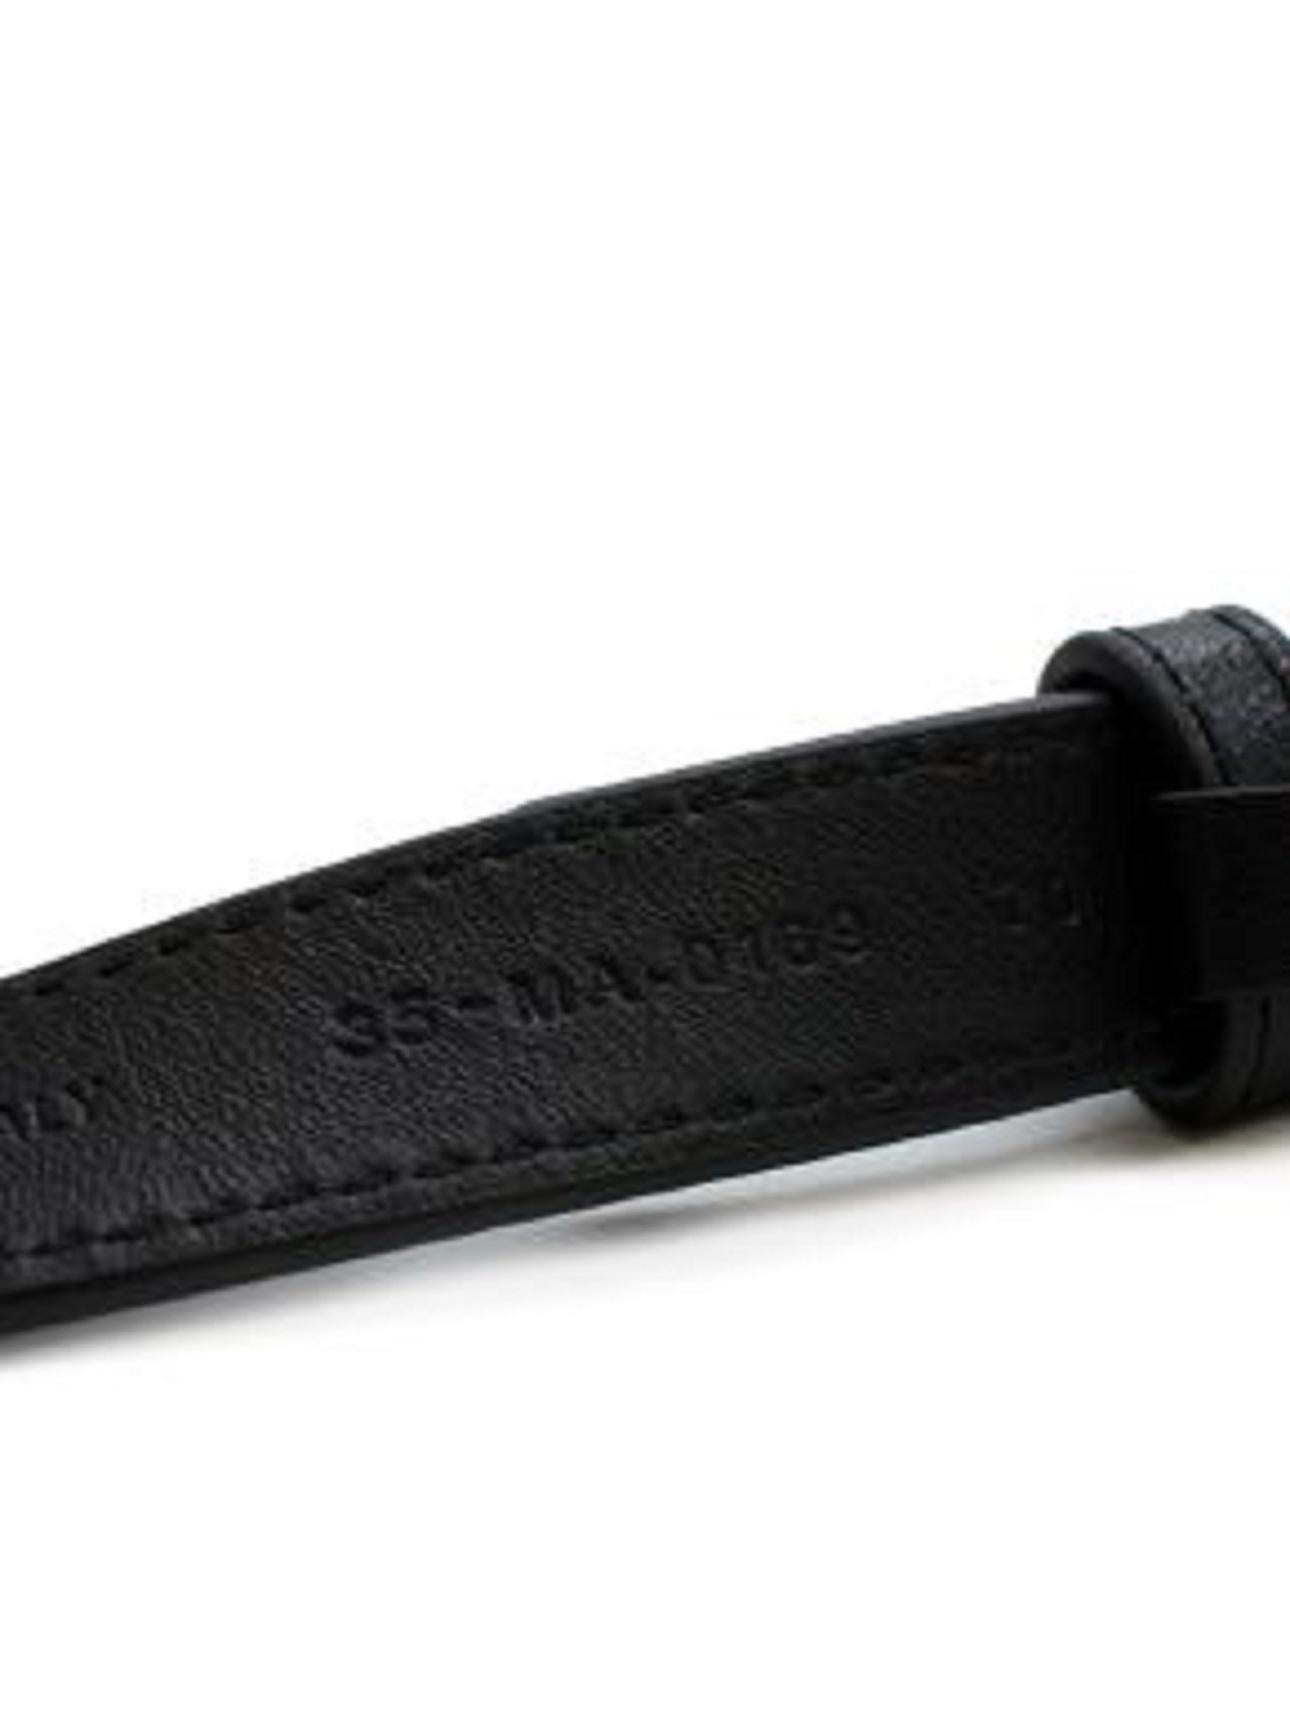 Dior Black Leather Montaigne Belt - Size 70 For Sale 4